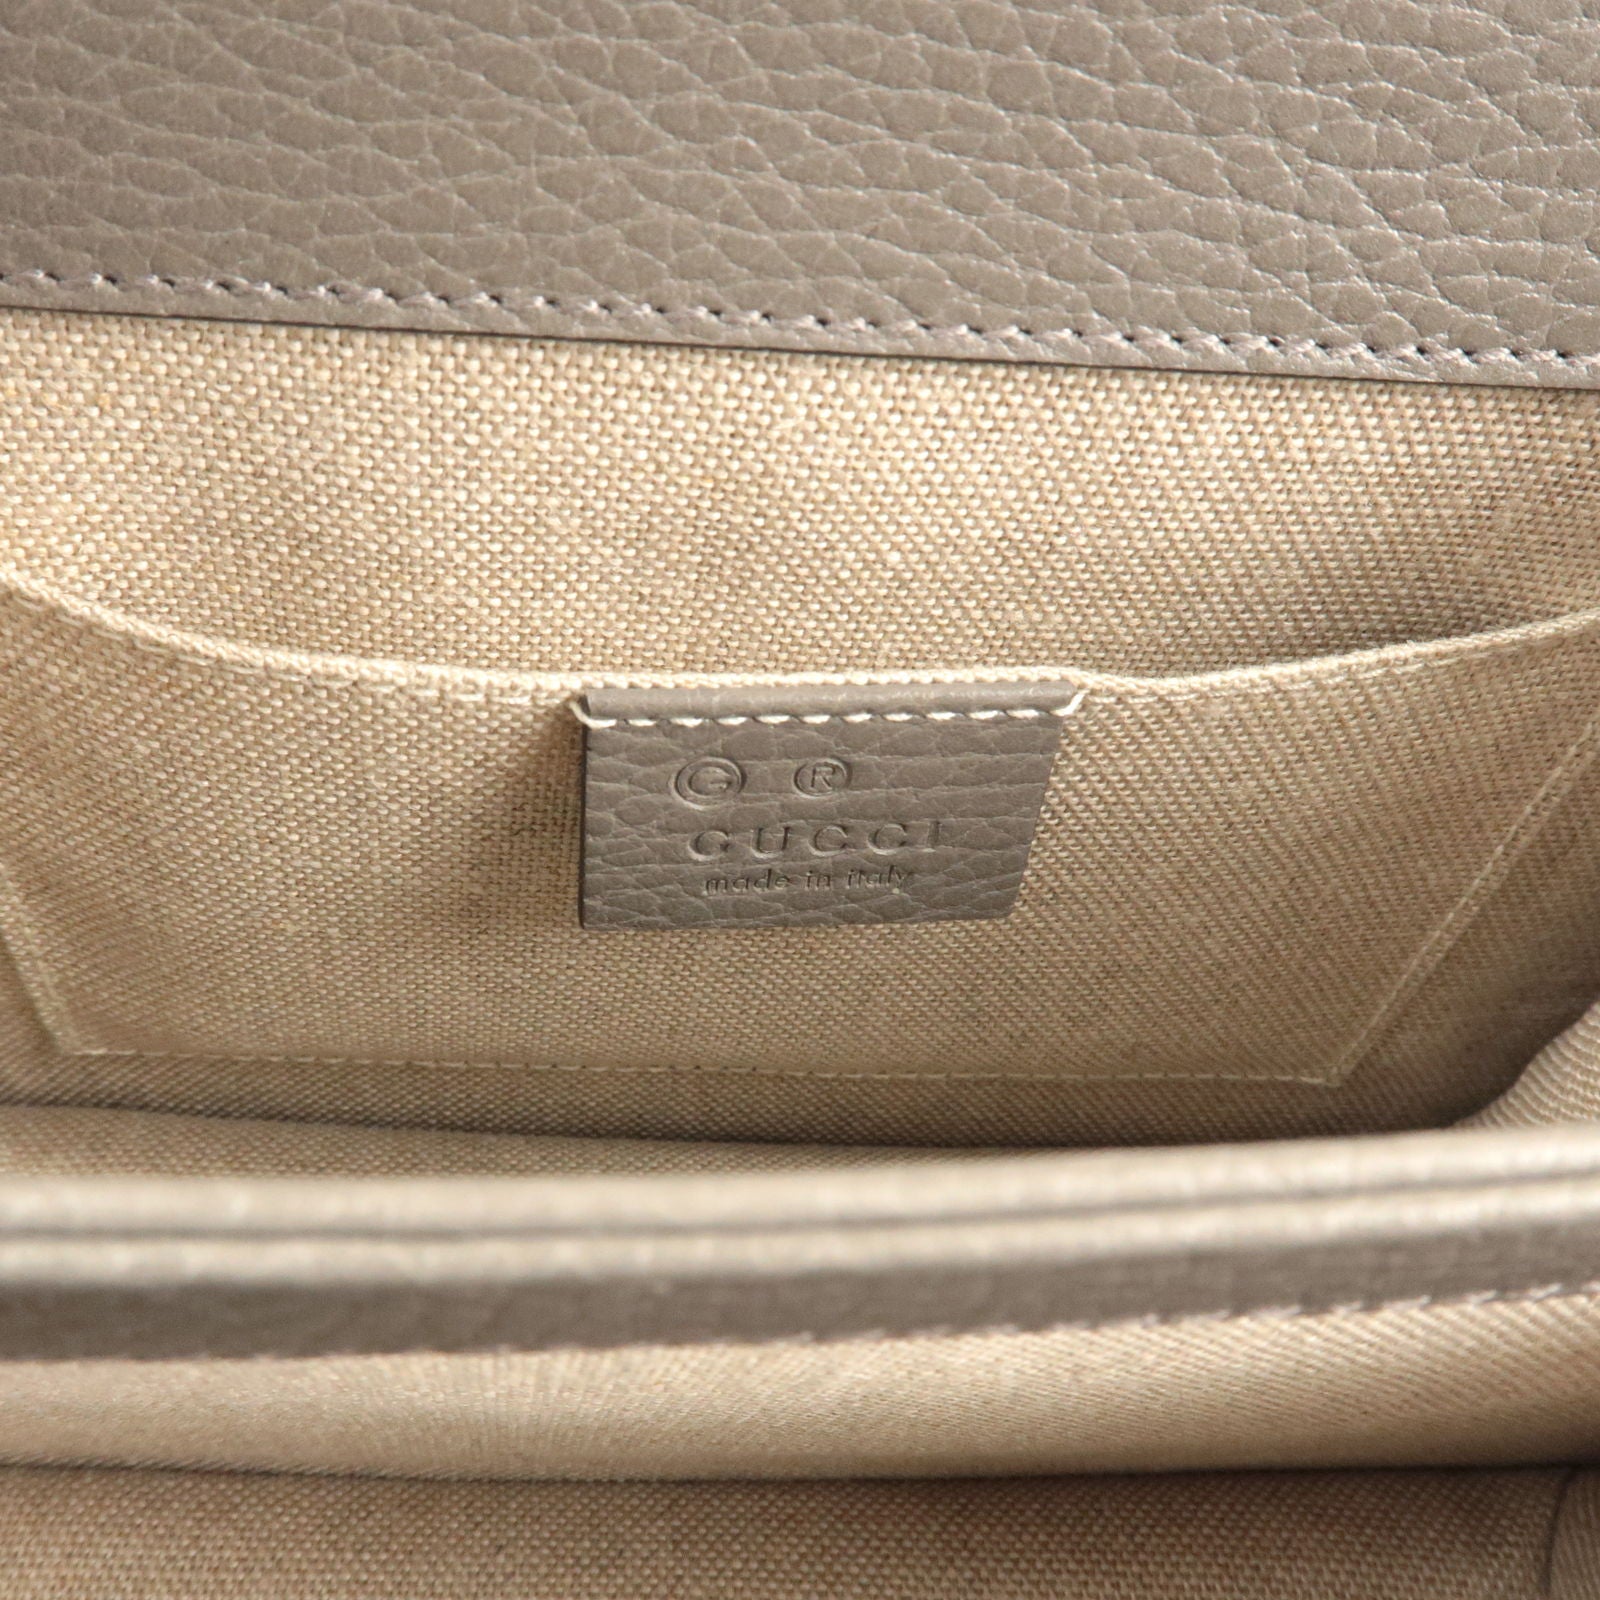 Gucci Interlocking BLACK Marmont Leather Silver Handbag Italy Chain 510304  NEW